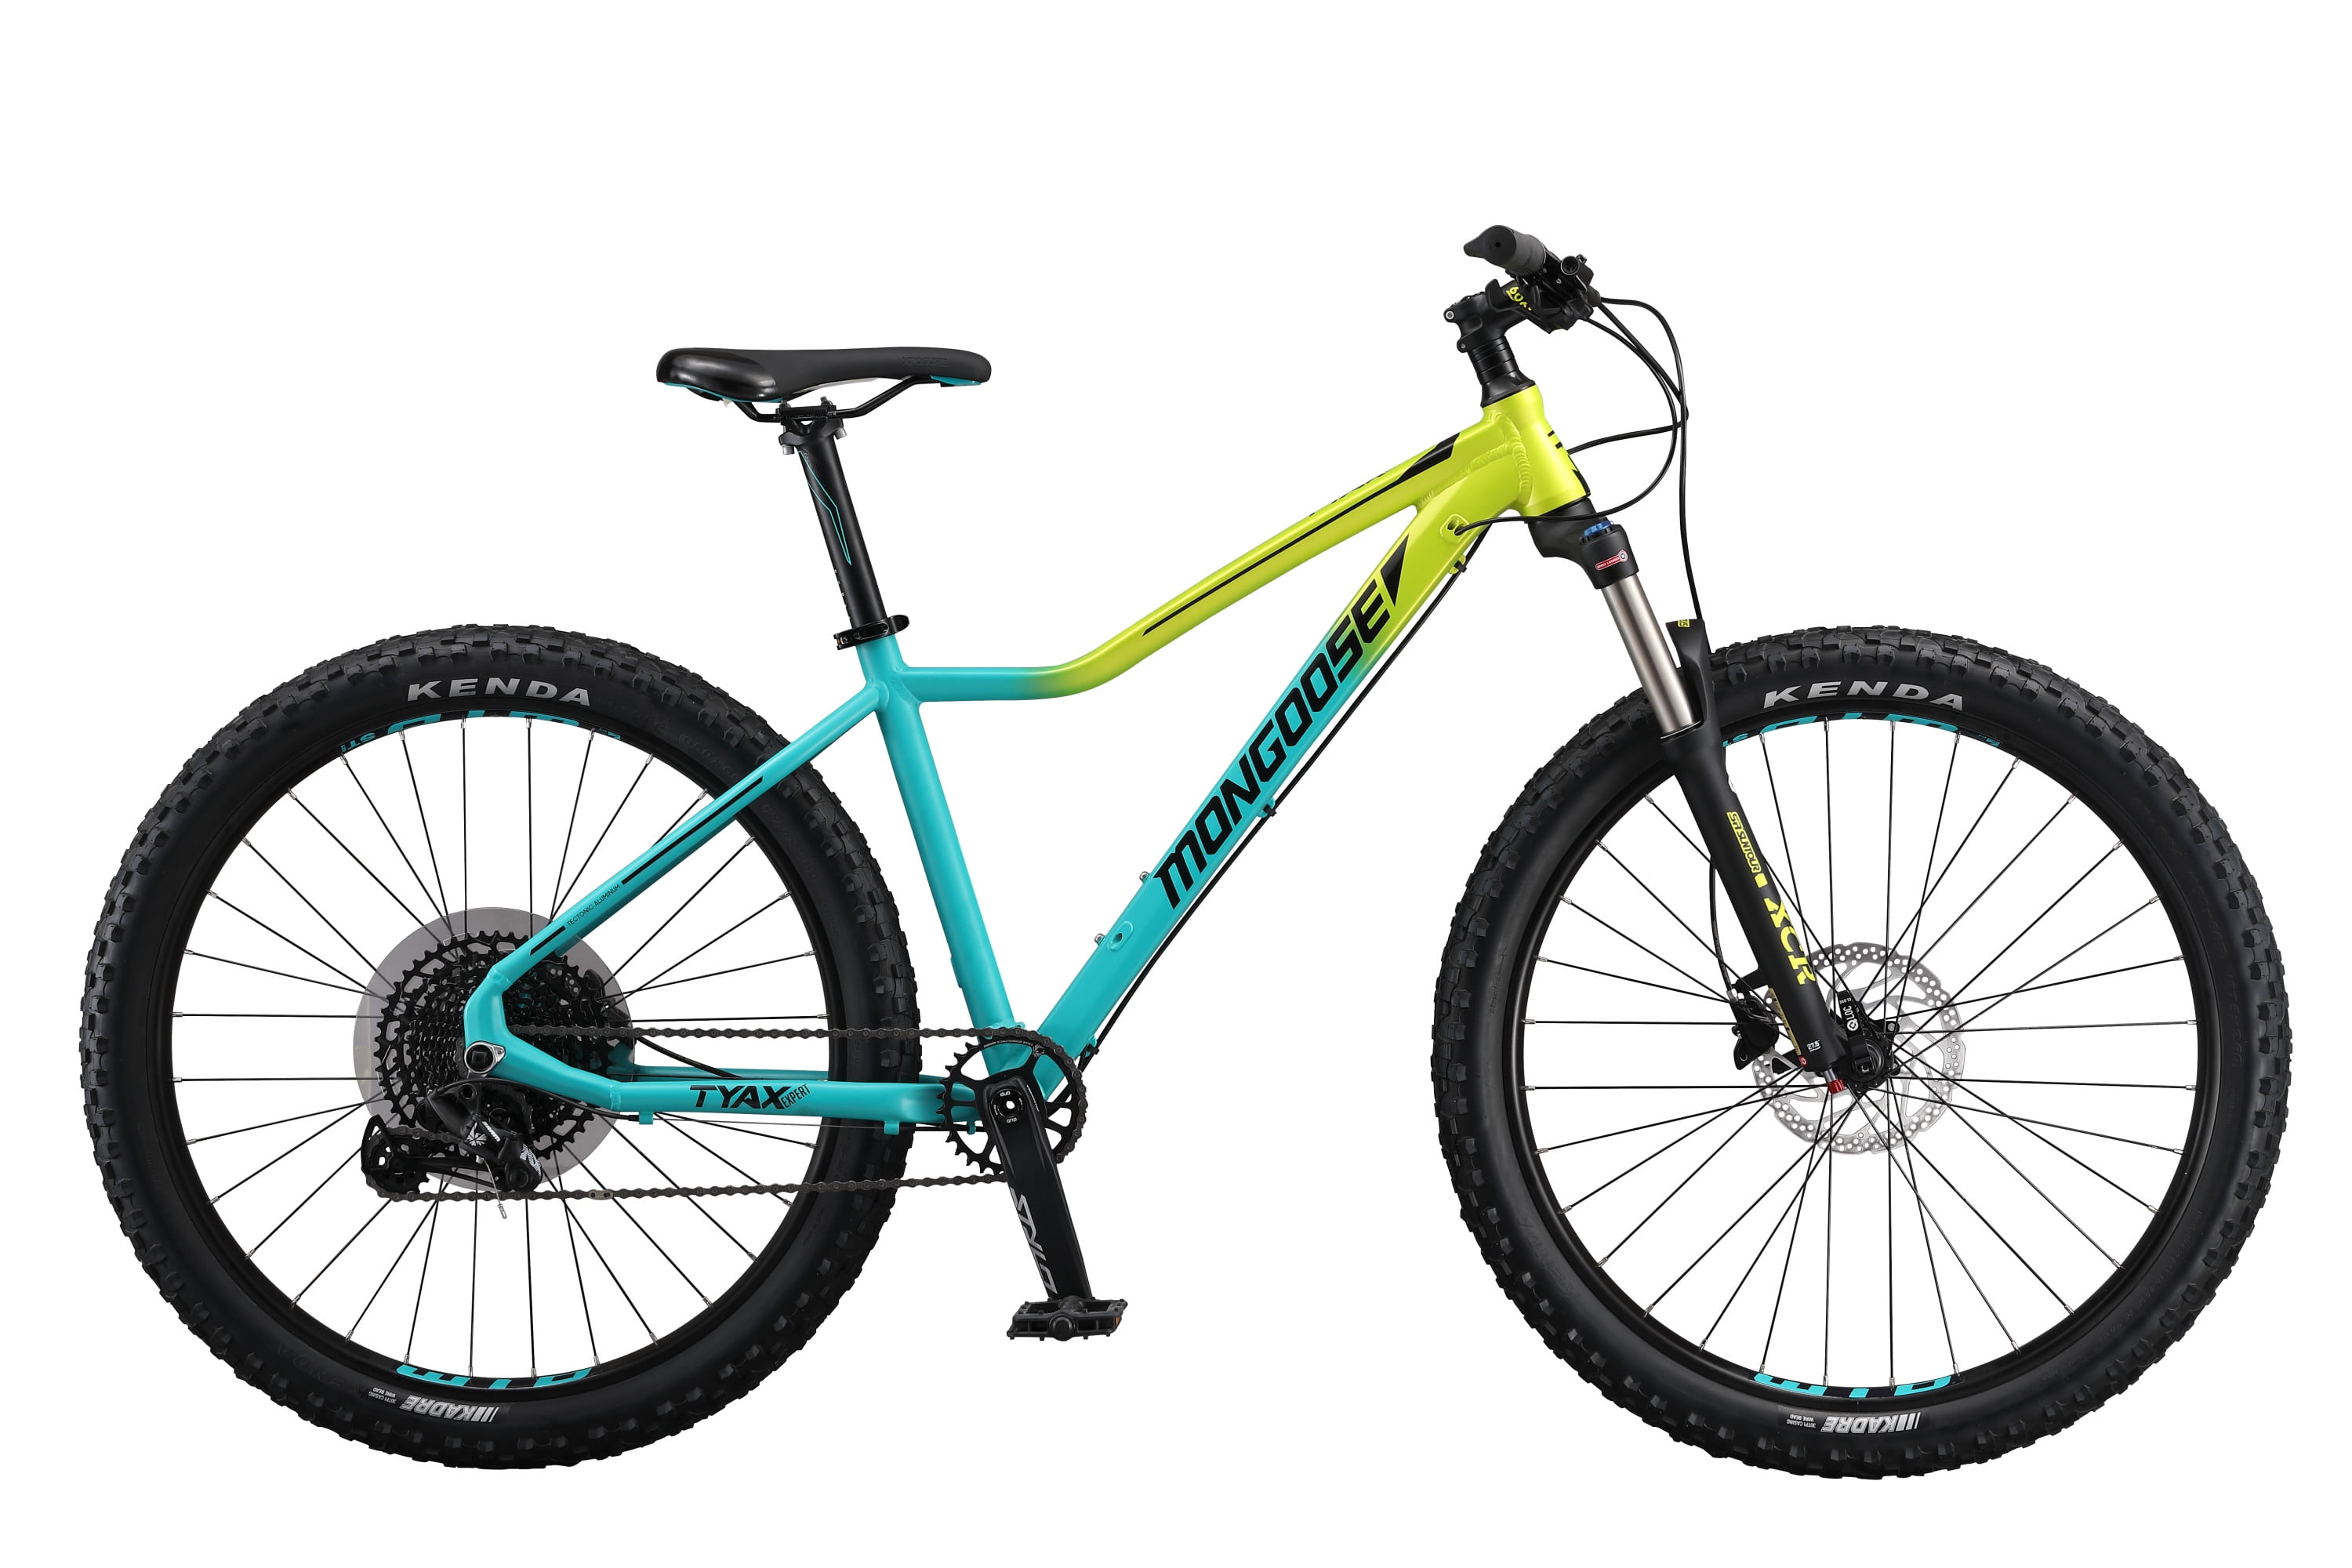 Mongoose Tyax 27.5 Medium Expert Adult Unisex 27.5-inch Mountain Bike